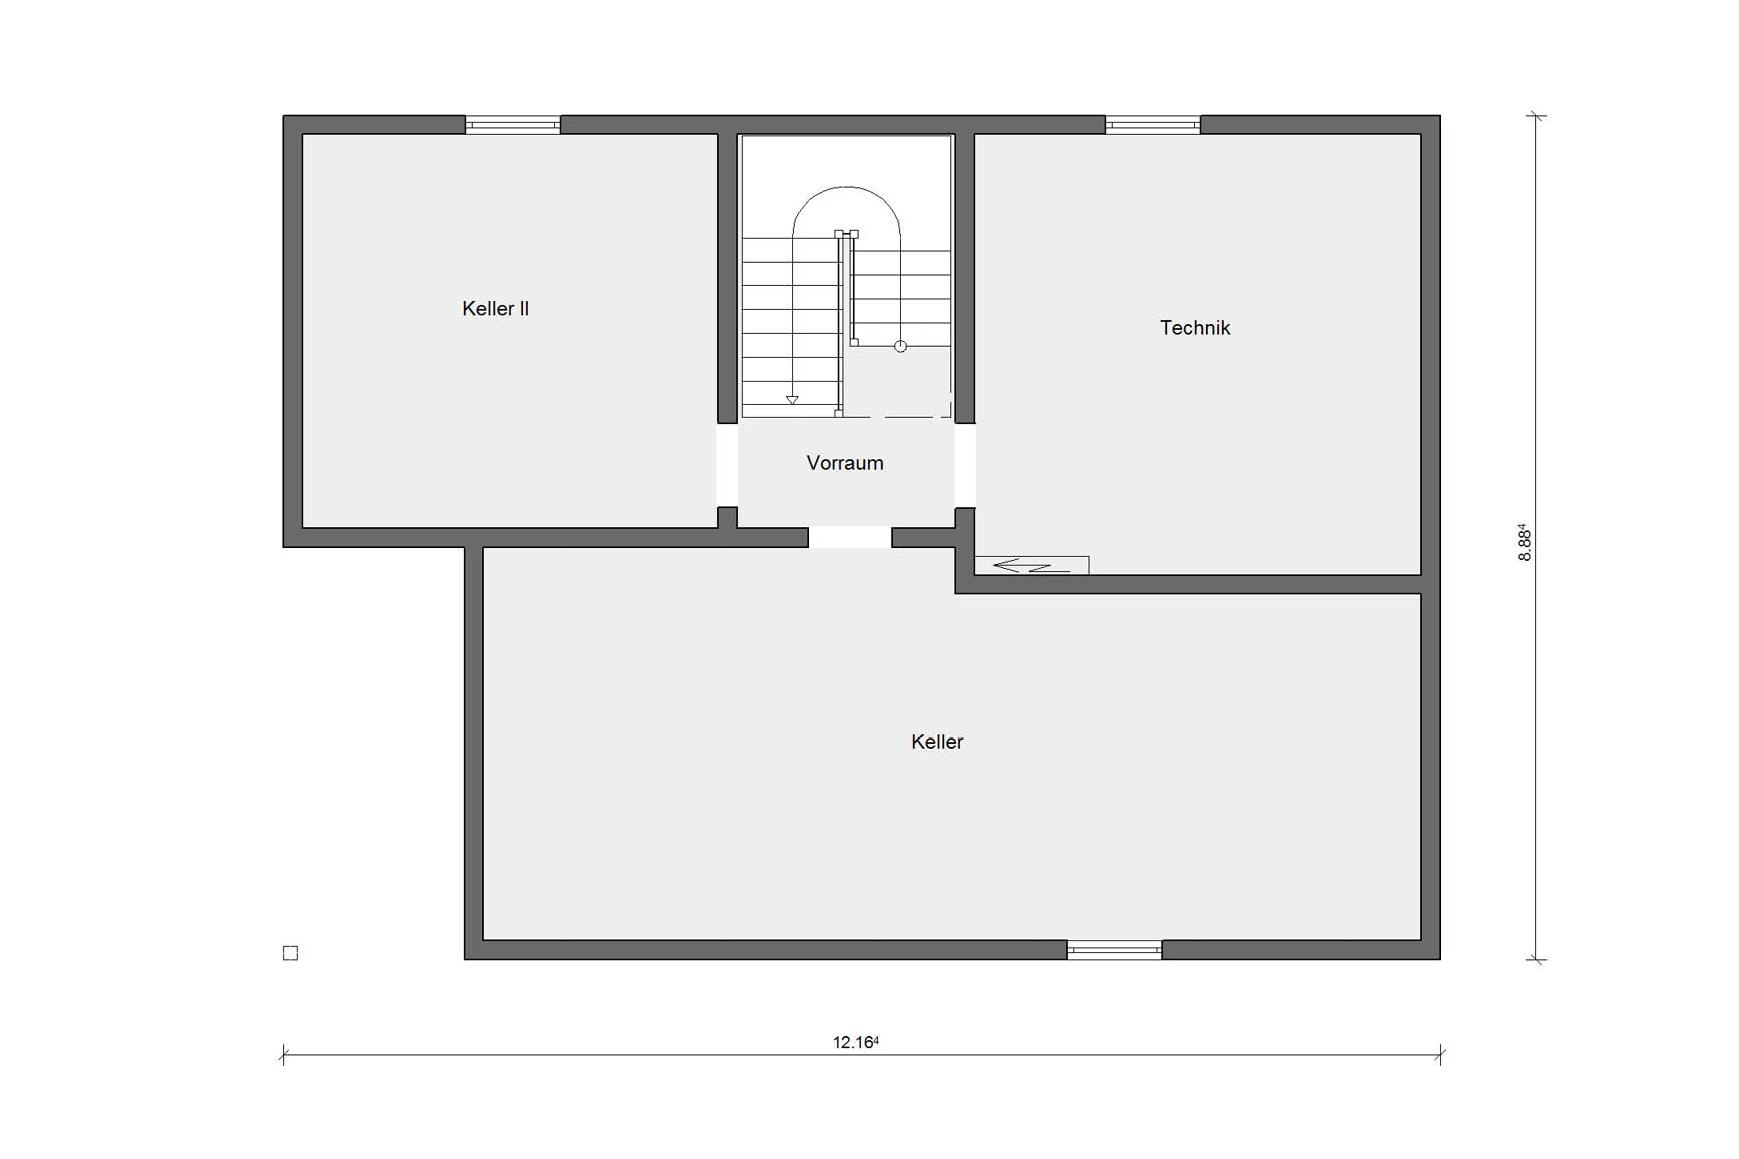 Basement floorplan E 20-172.2 Energieplus-prefabricated house